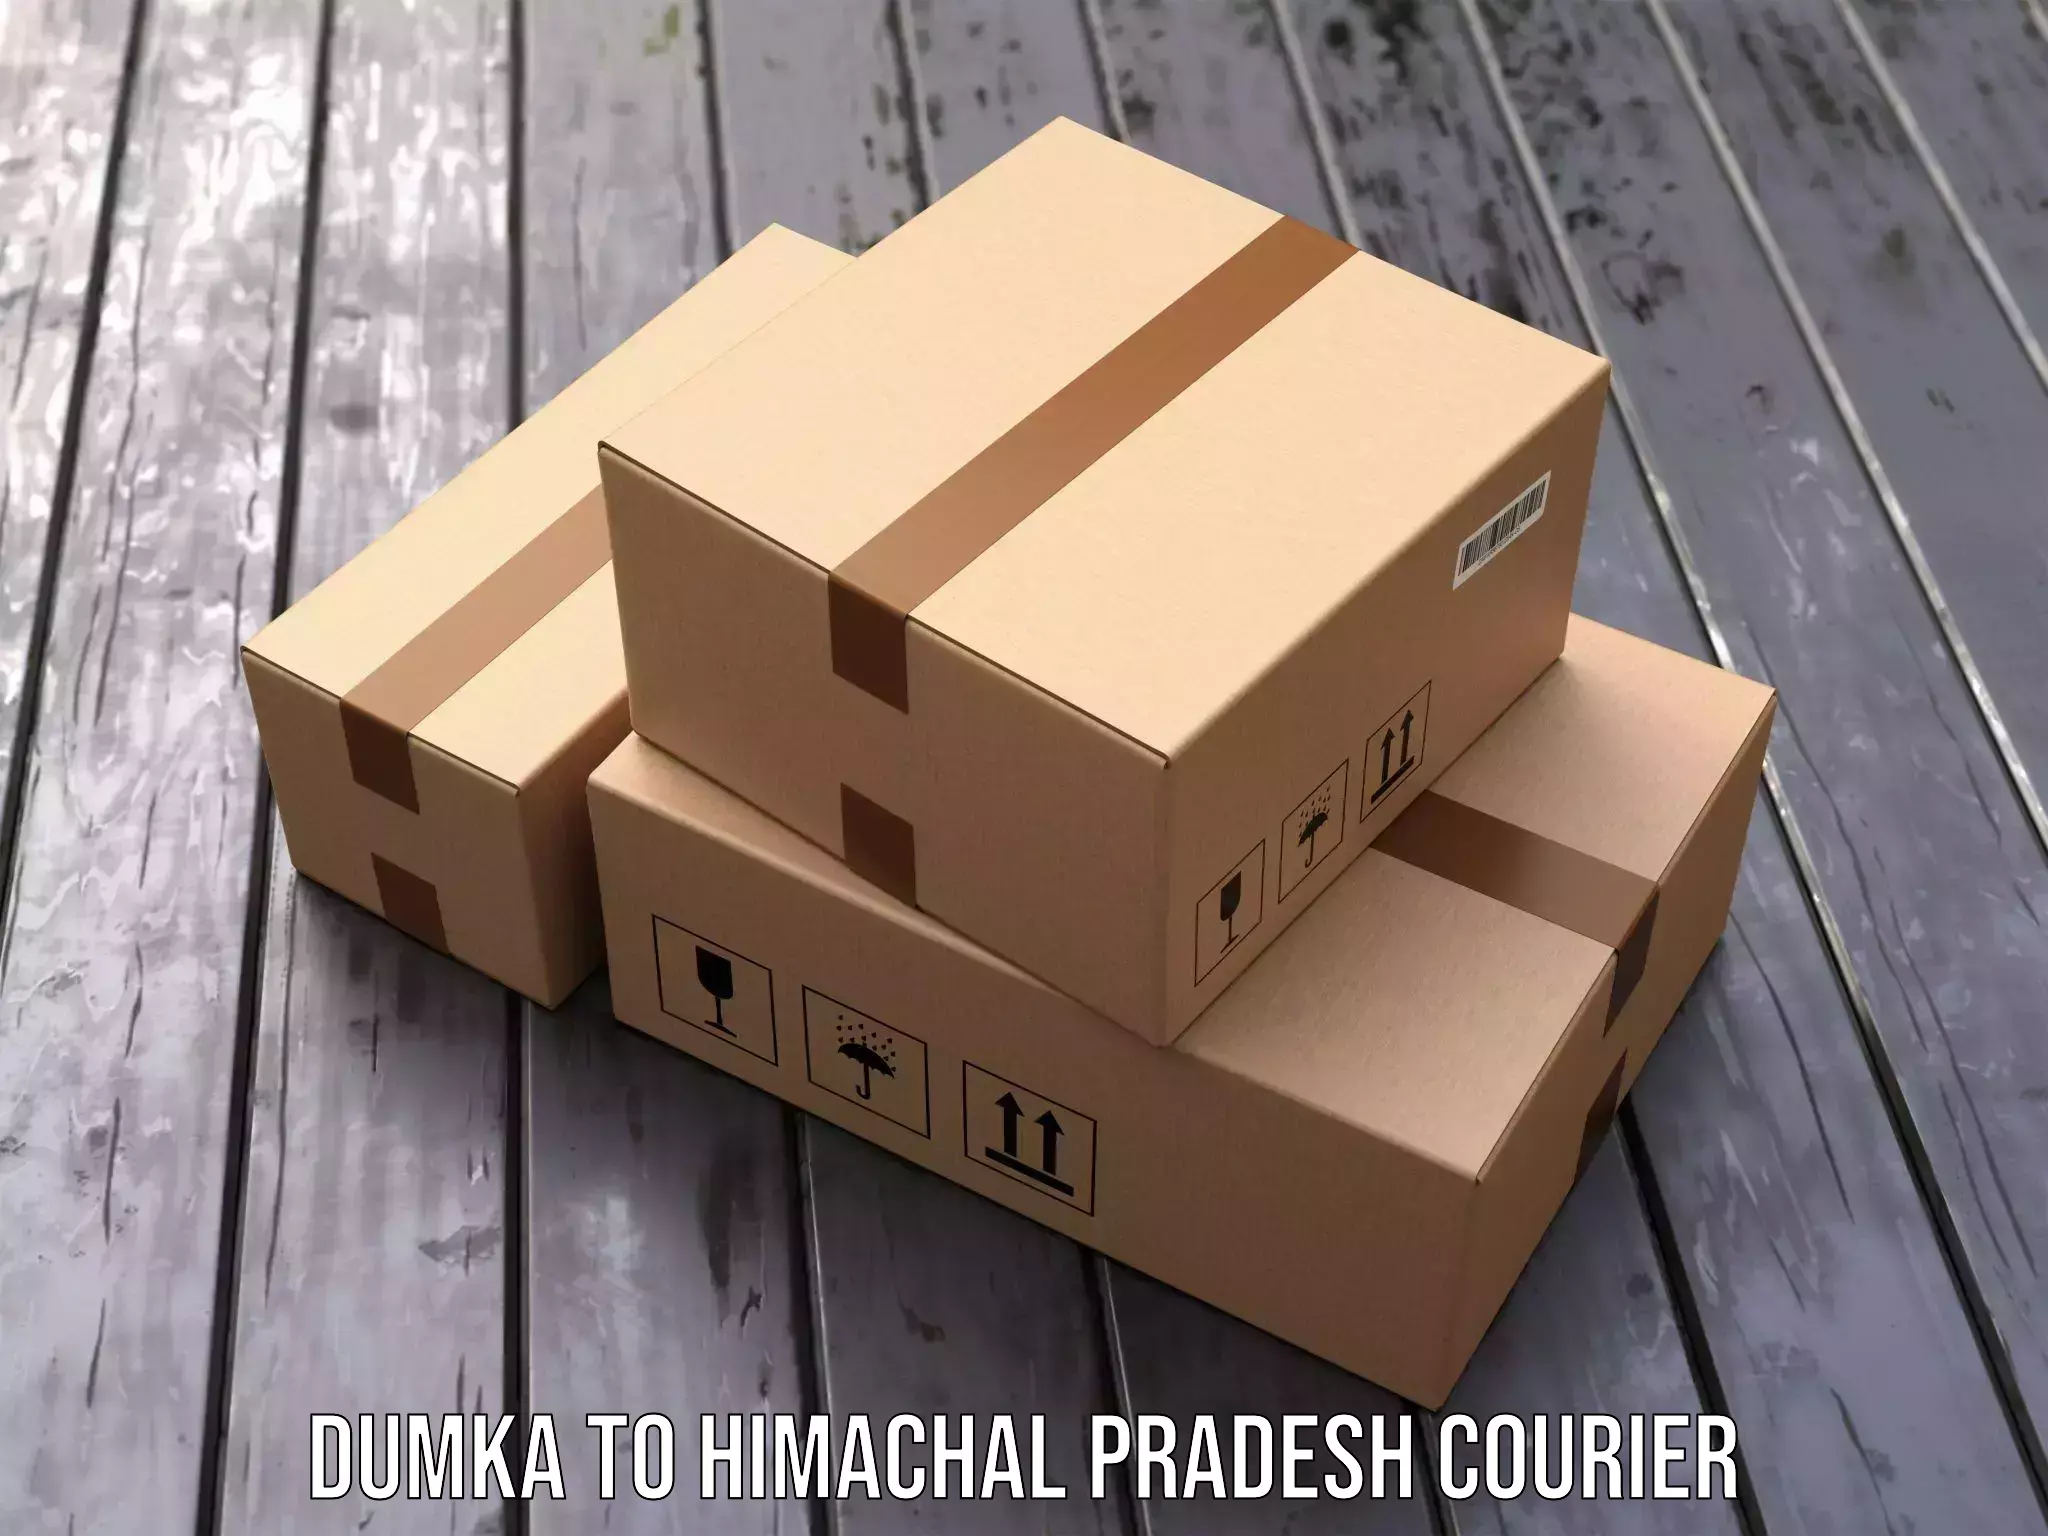 Global logistics network Dumka to Himachal Pradesh